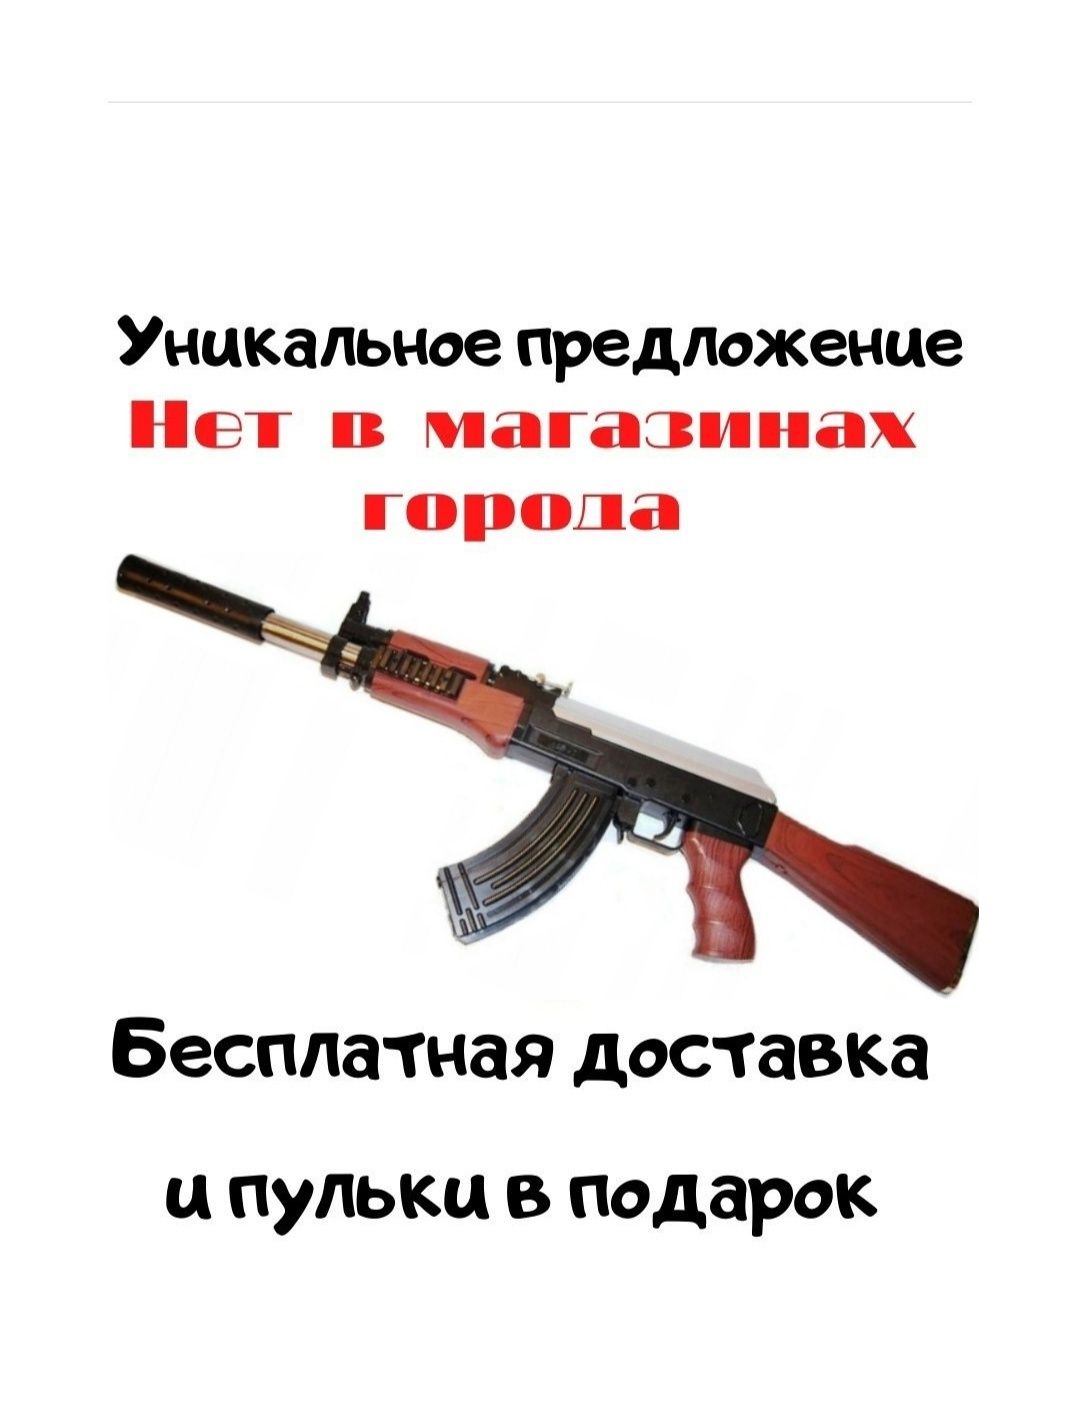 Автомат Калашникова АК-47(игрушка)